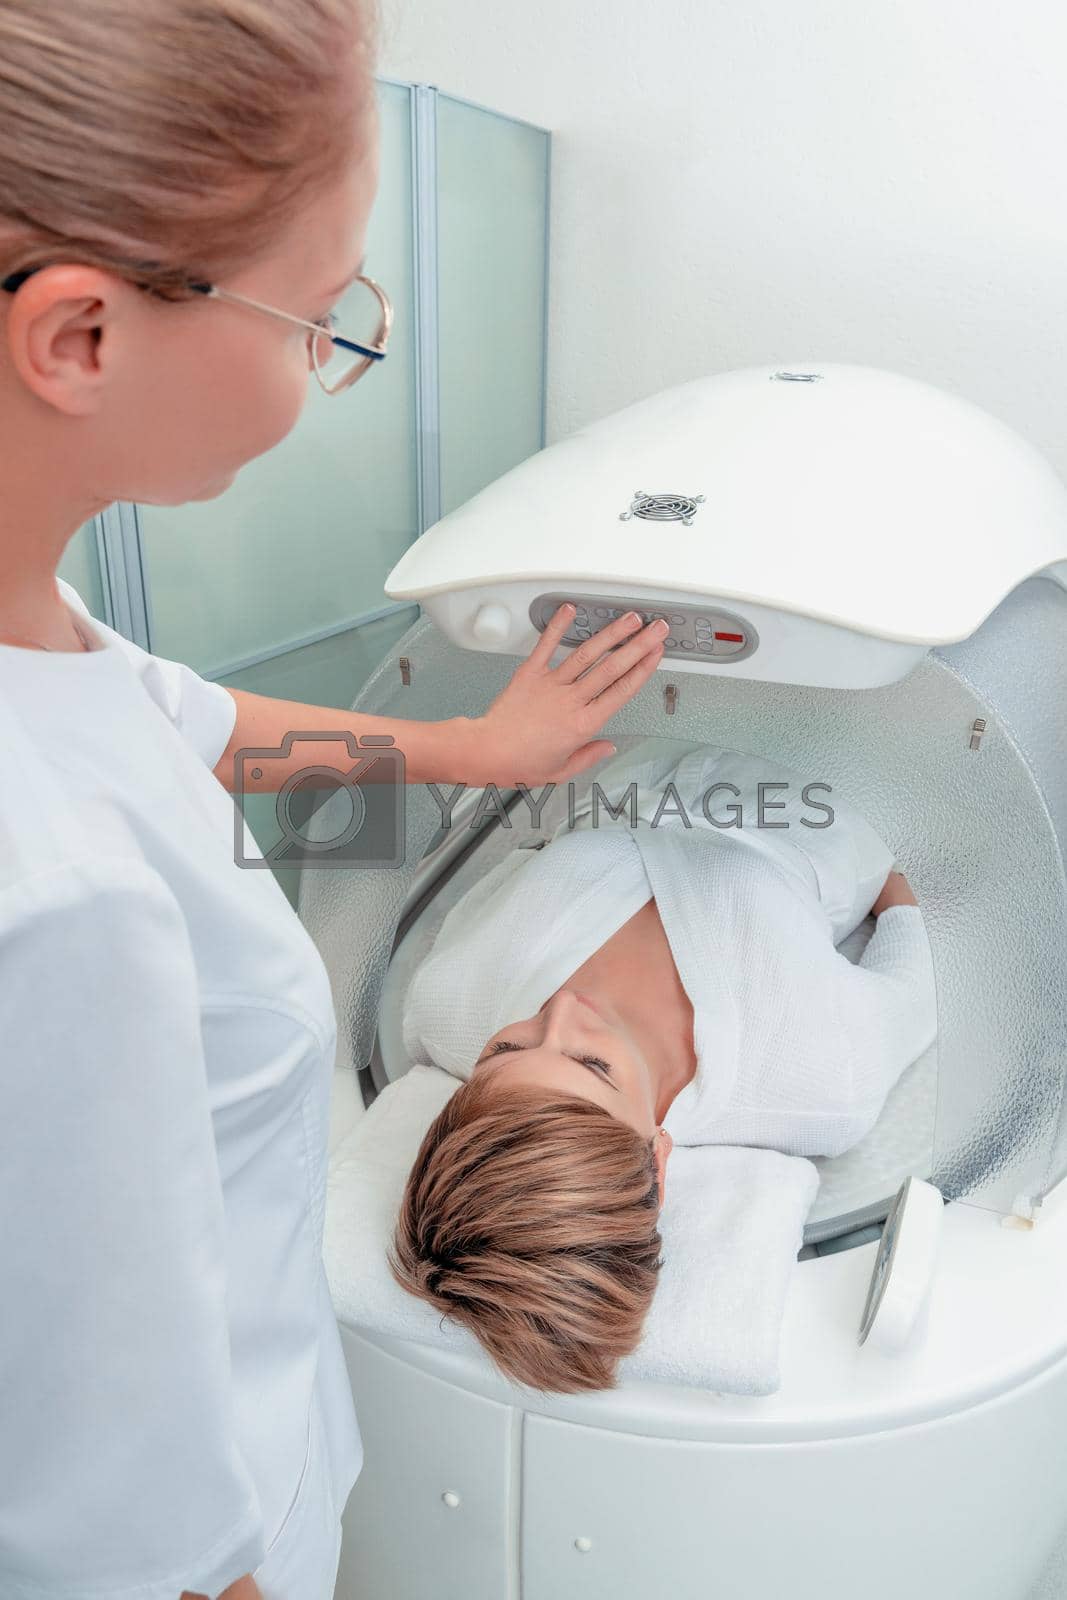 hydromassage bathtub in a cosmetological clinic, spa capsule